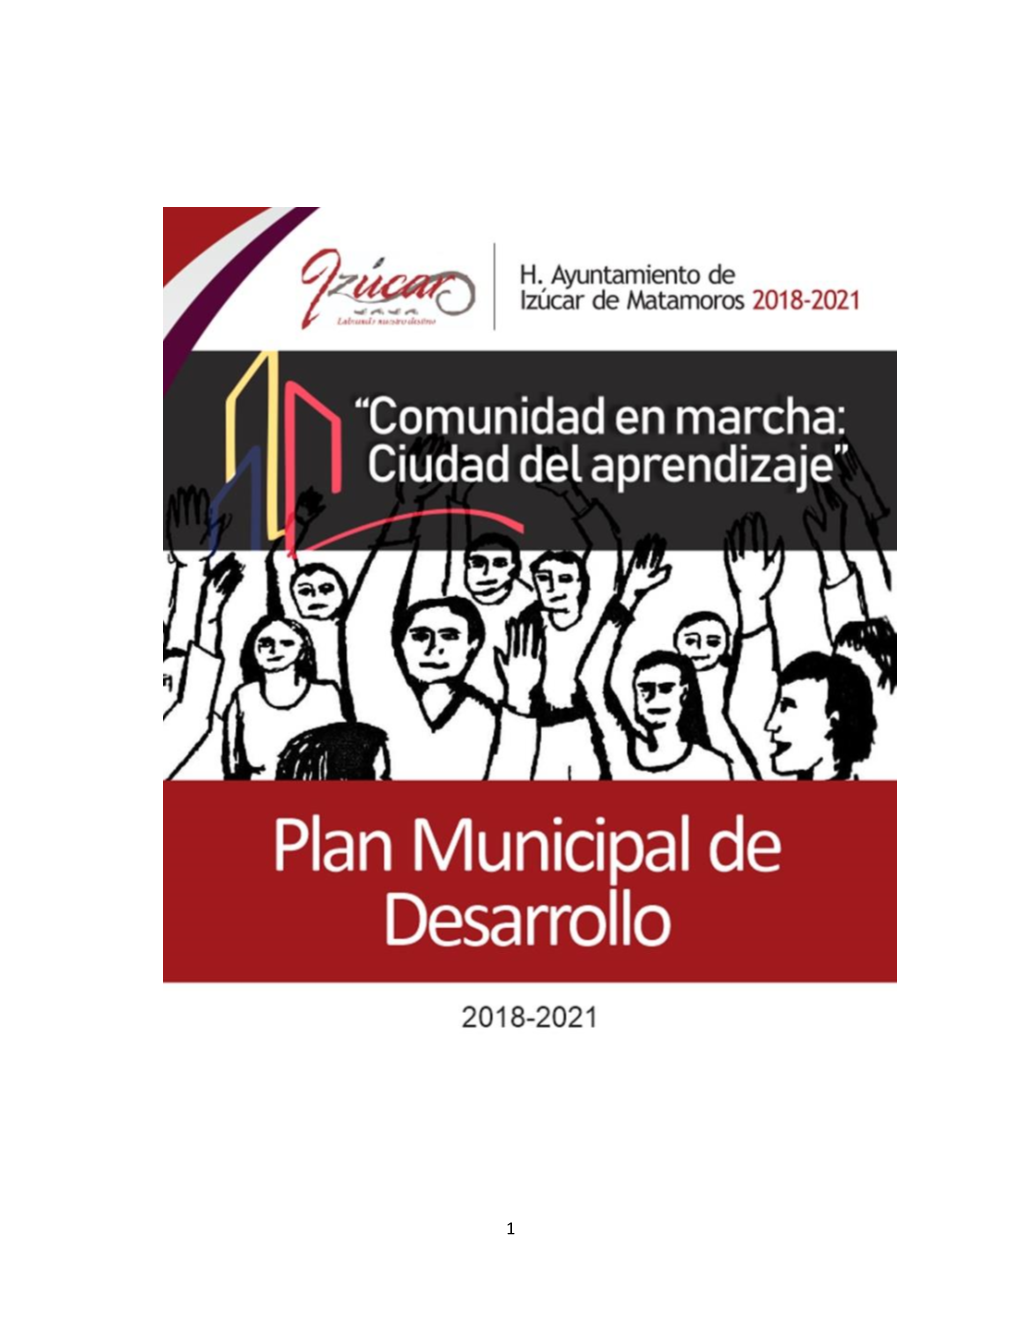 Plan De Desarrollo Municipal De Izúcar De Matamoros 2018-2021